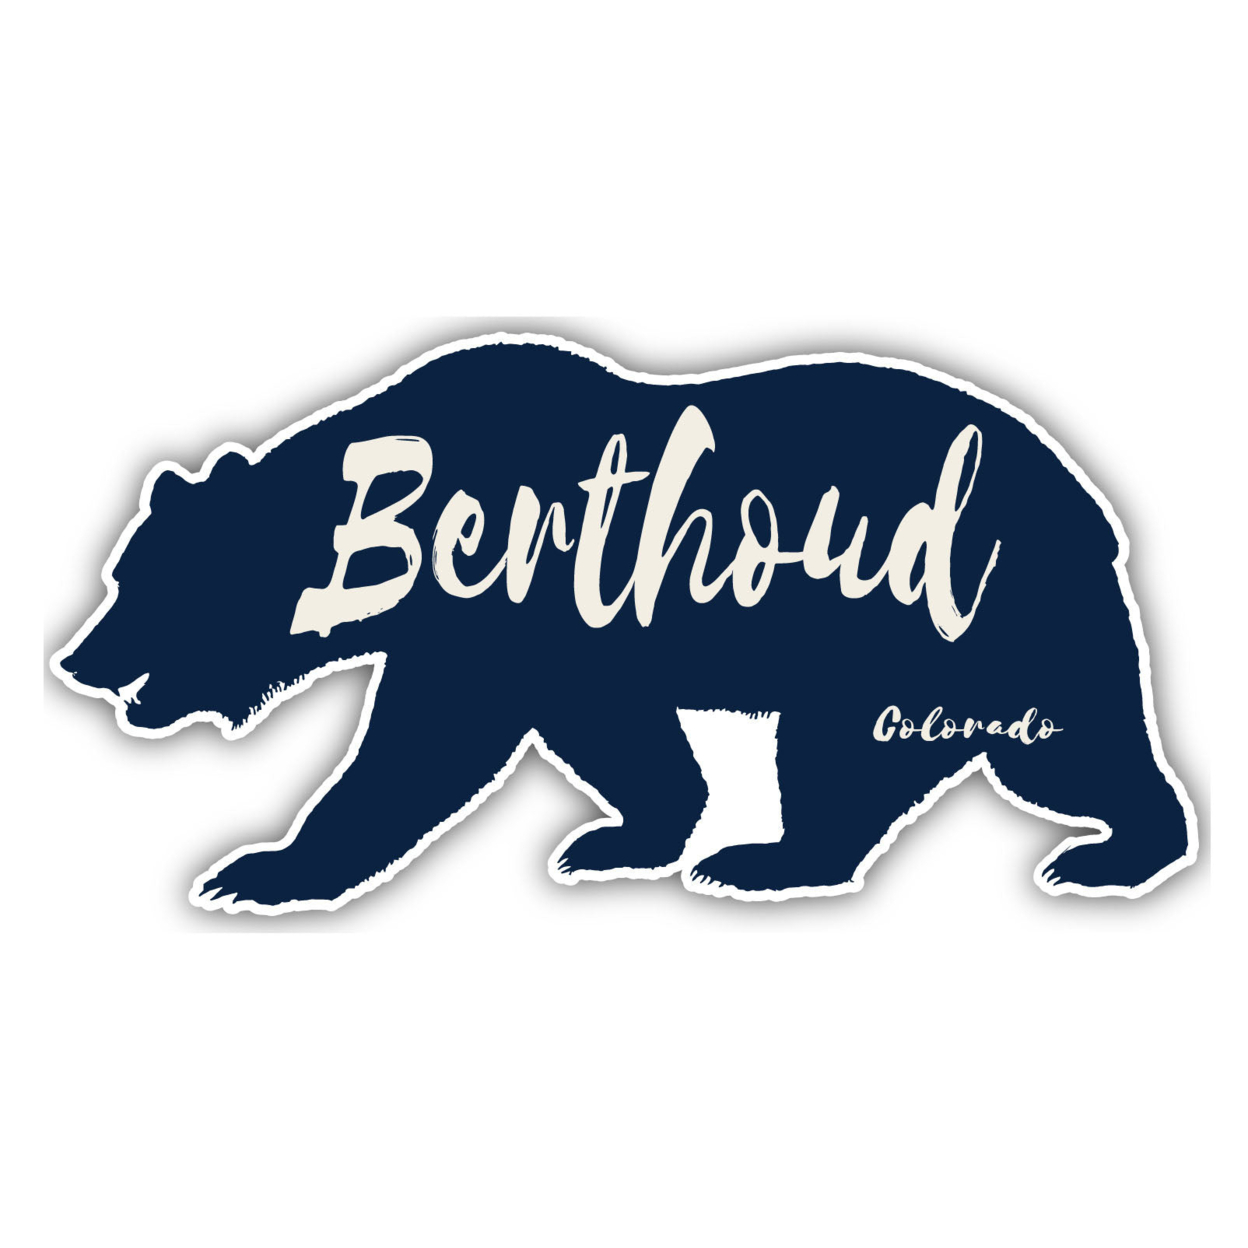 Berthoud Colorado Souvenir Decorative Stickers (Choose Theme And Size) - Single Unit, 4-Inch, Adventures Awaits